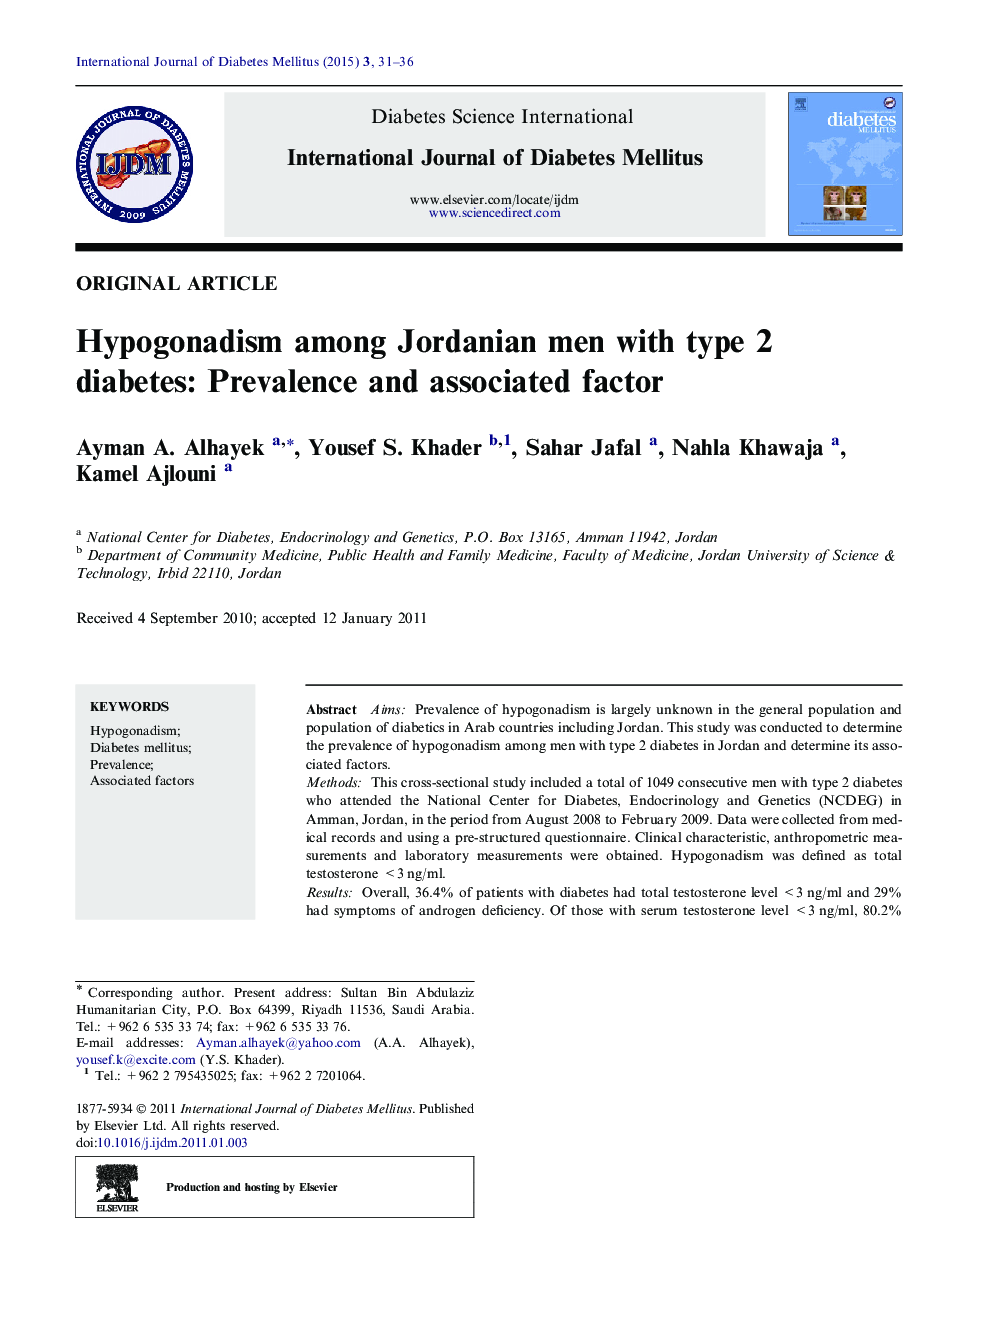 Hypogonadism among Jordanian men with type 2 diabetes: Prevalence and associated factor